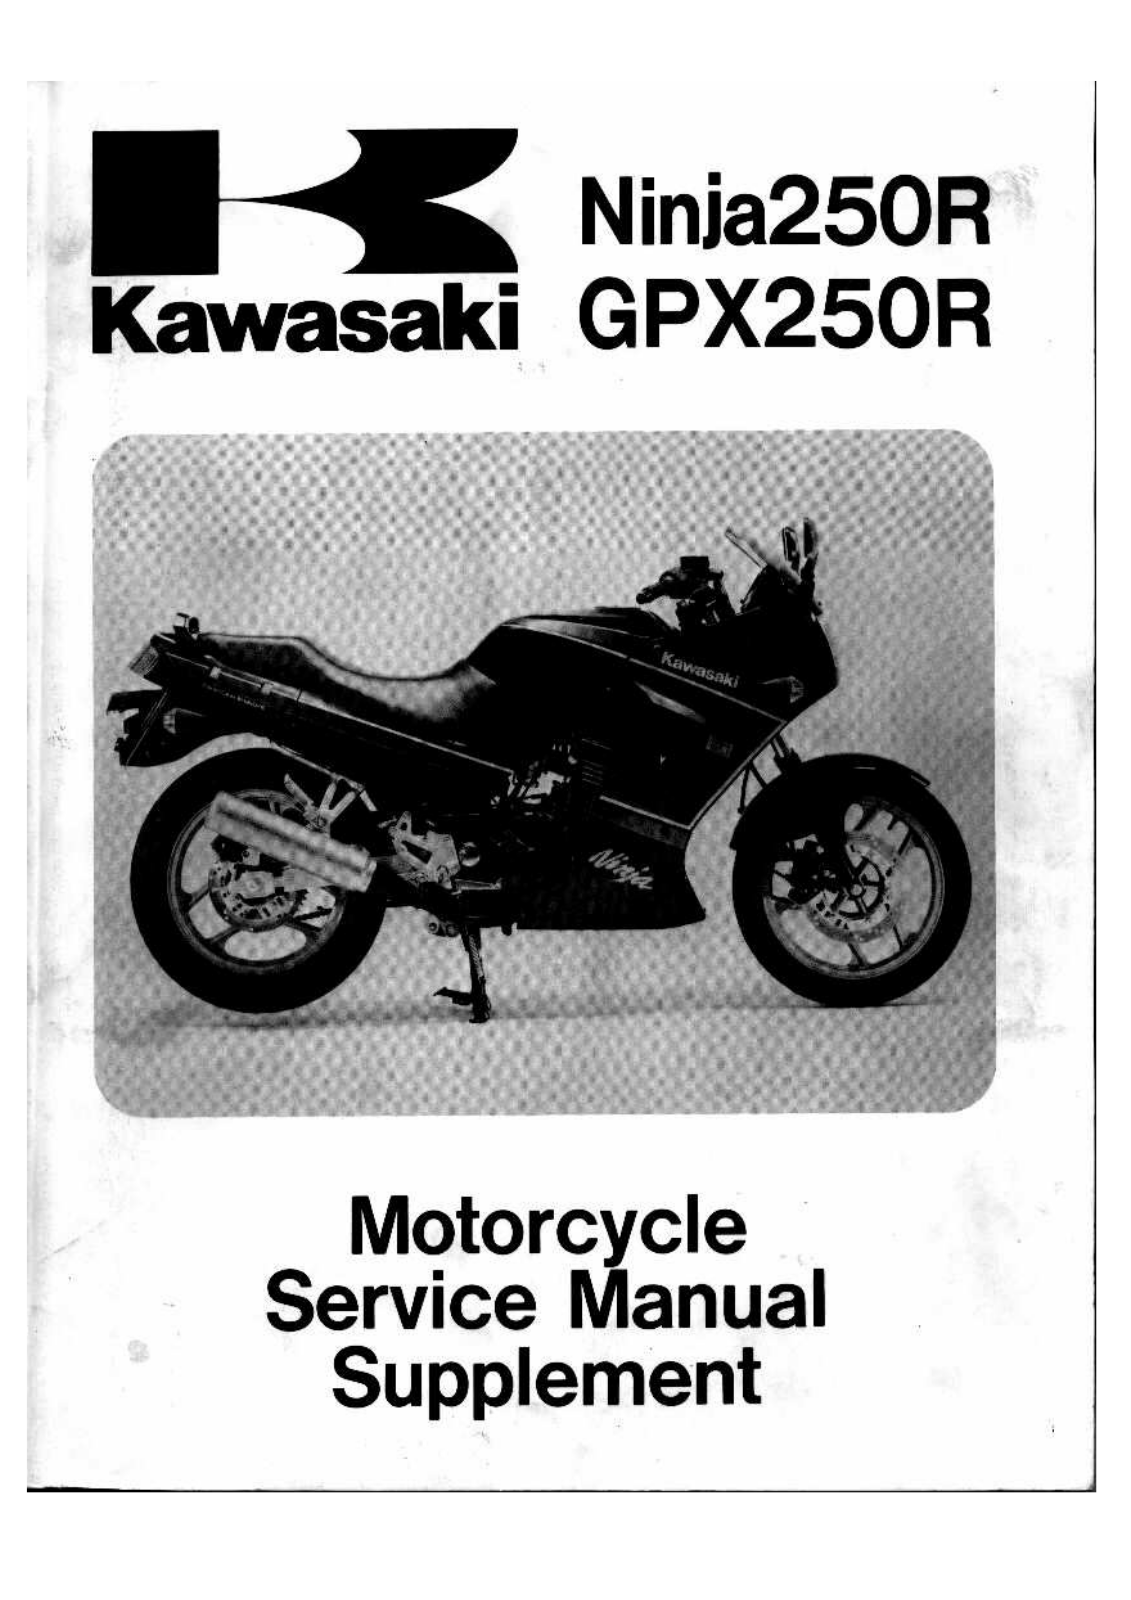 Kawasaki GPX250R, Ninja EX250 Service Manual